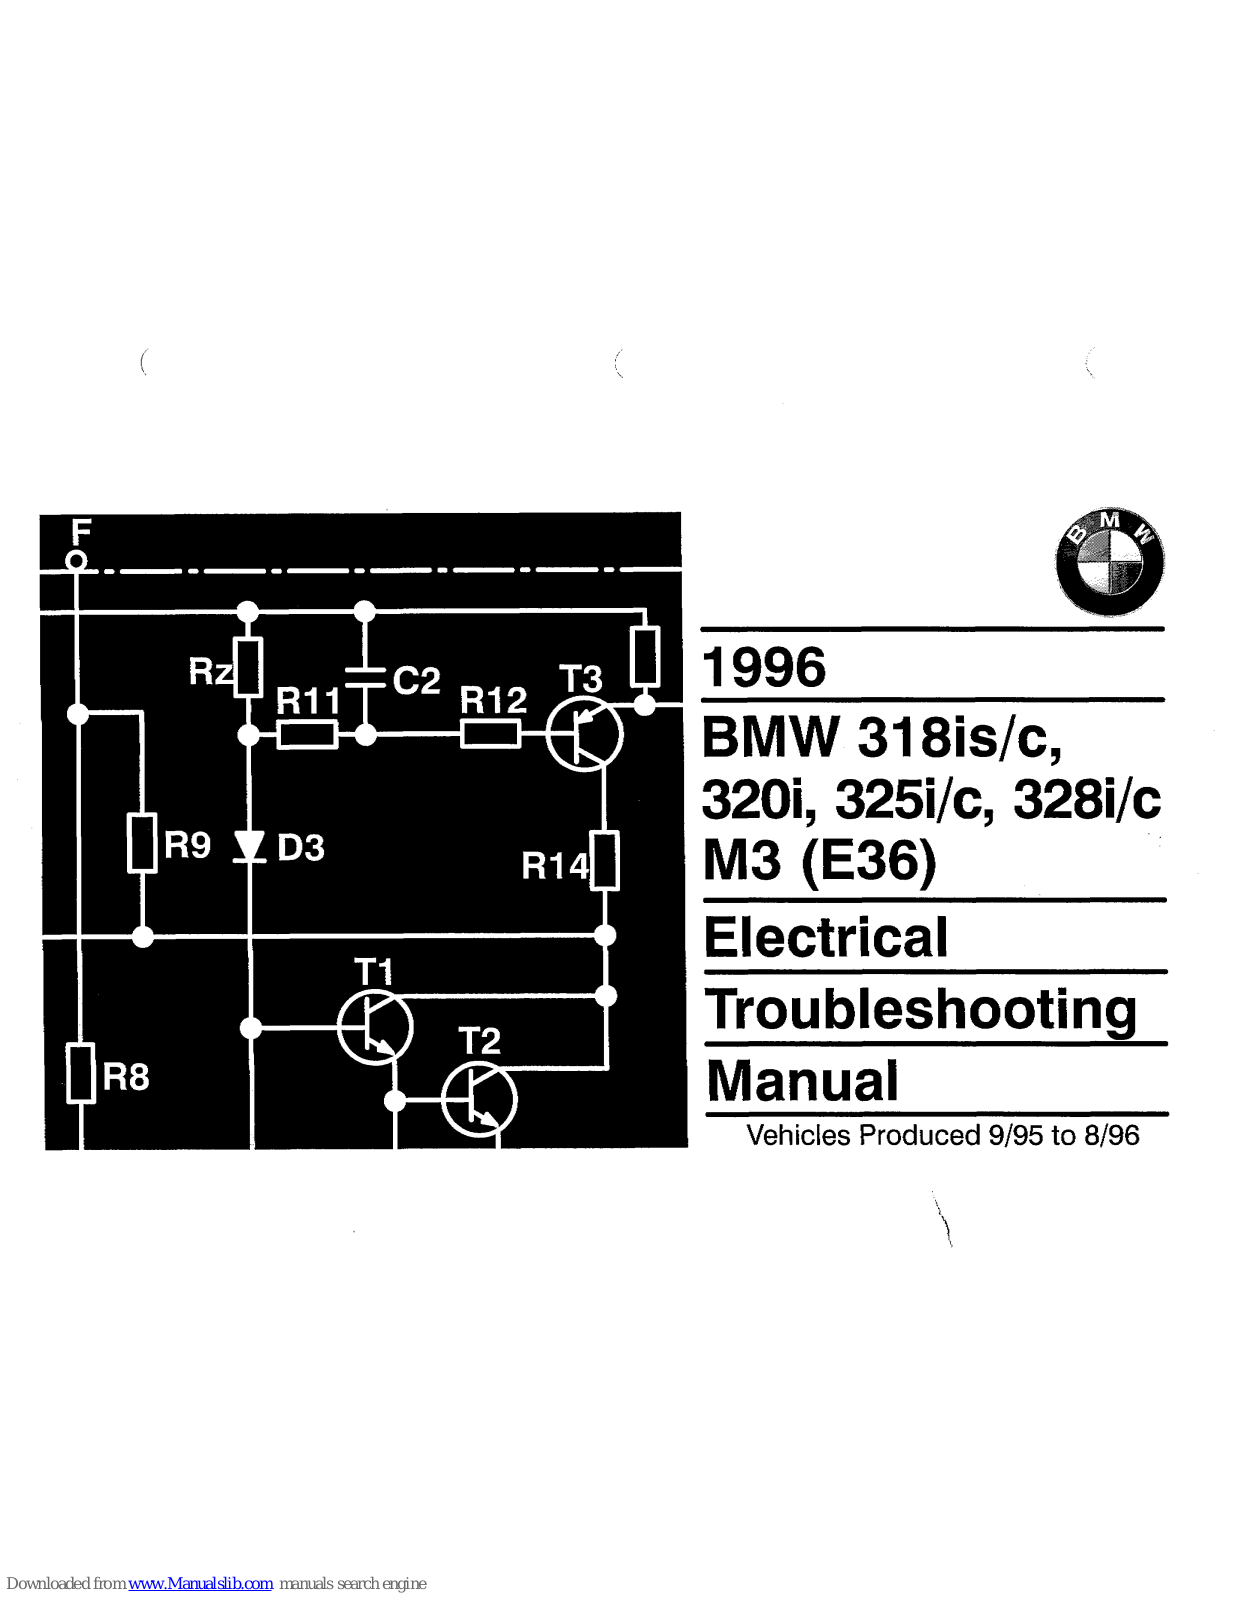 BMW 318is/C, 320i, M3(E36), 325i/c, 328i/c Electrical Troubleshooting Manual